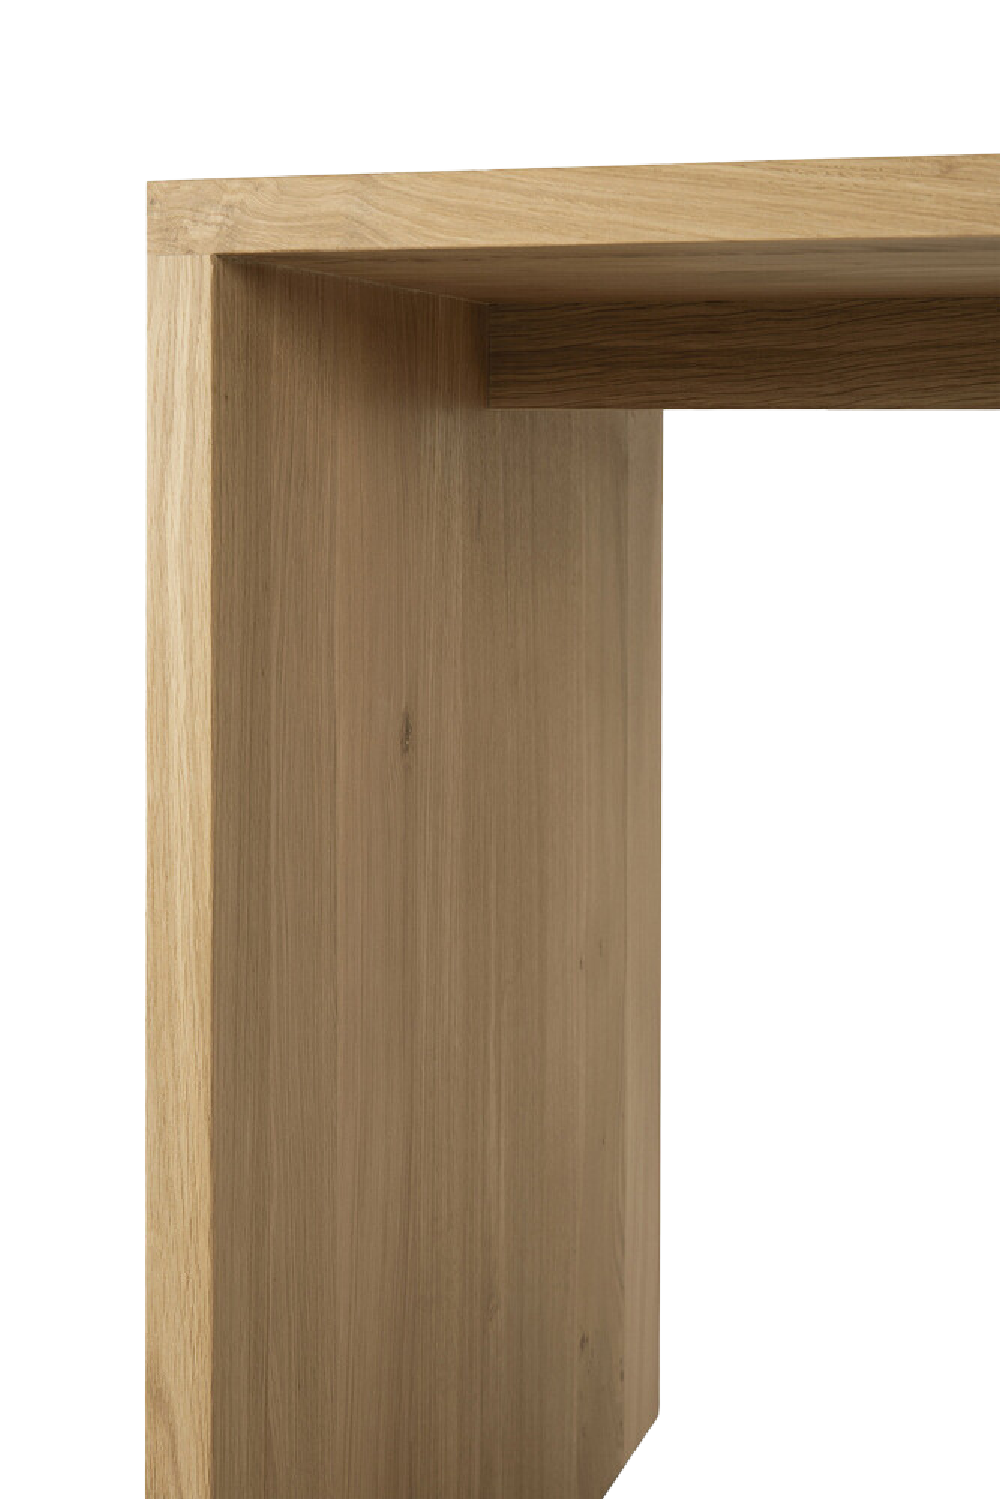 Minimalist Oak Desk | Ethnicraft U | Oroa.com